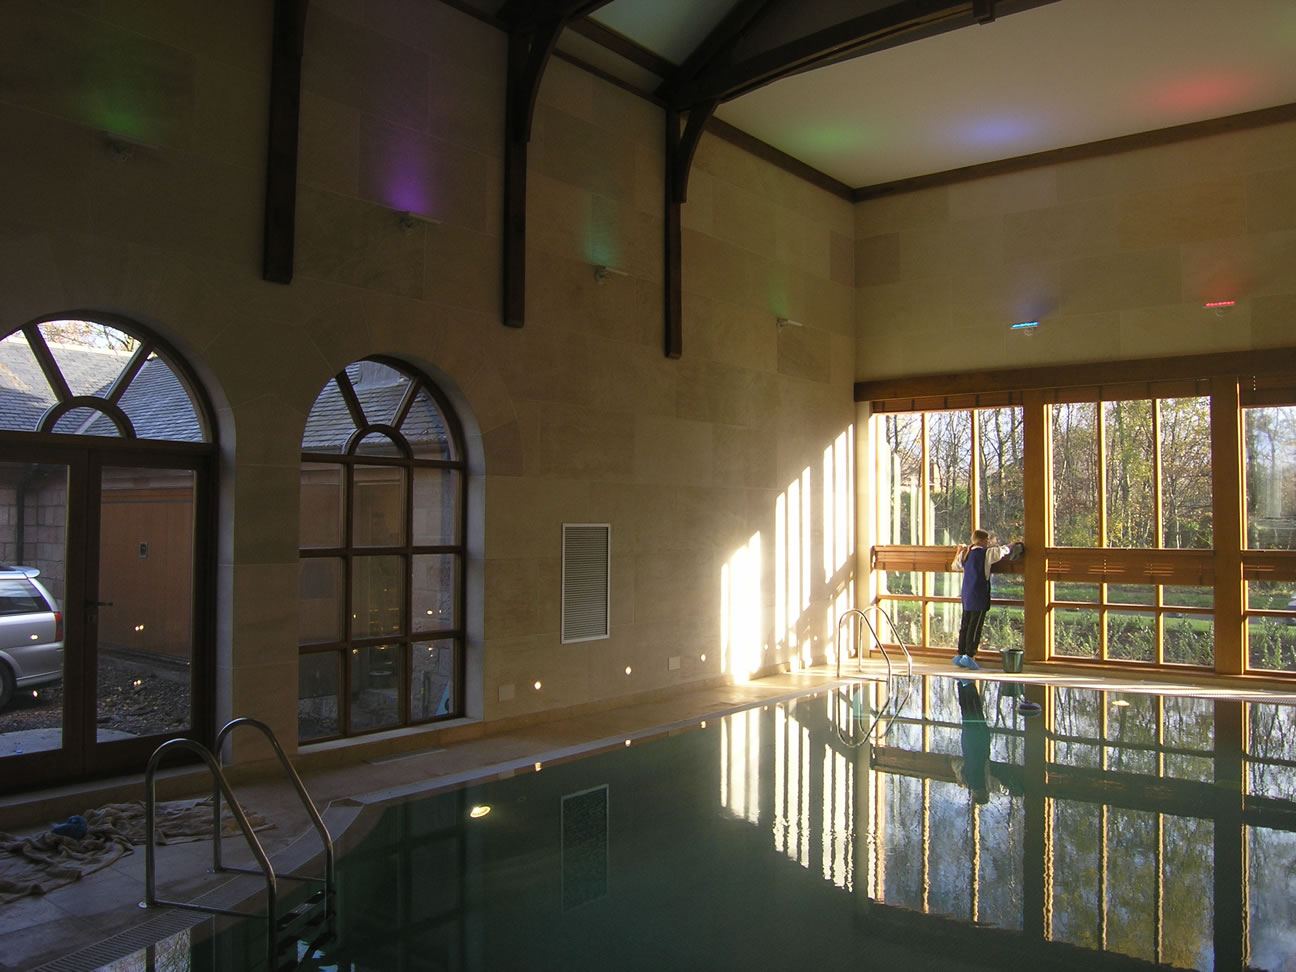 Stone block, private house swimming pool. Architect – Designworks